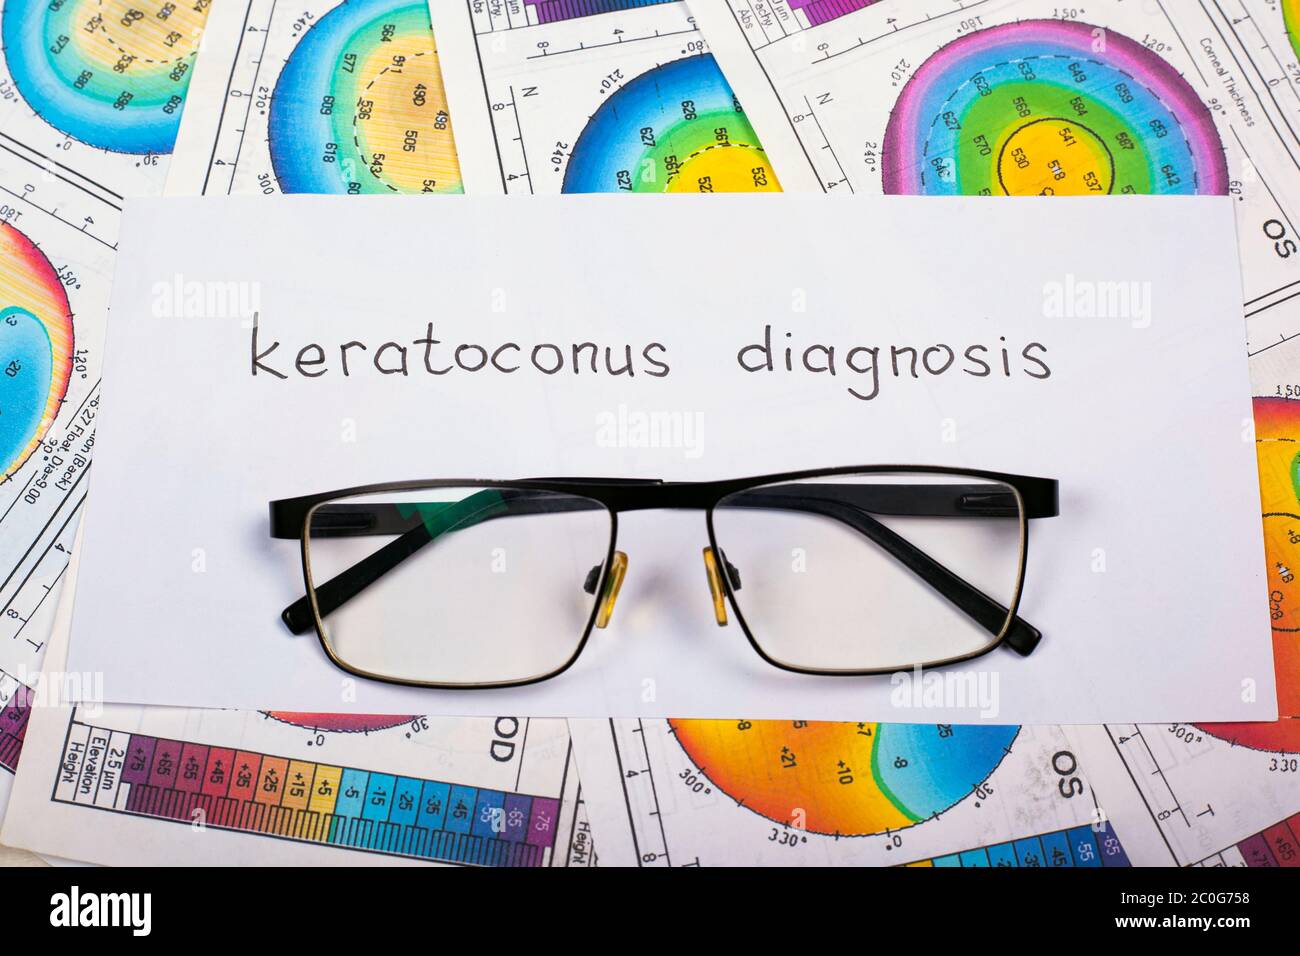 Kiev, Ukraine - 07.07.2019 diagnosis keratoconus, corneal disease, topograms of cornea and glasses. Stock Photo